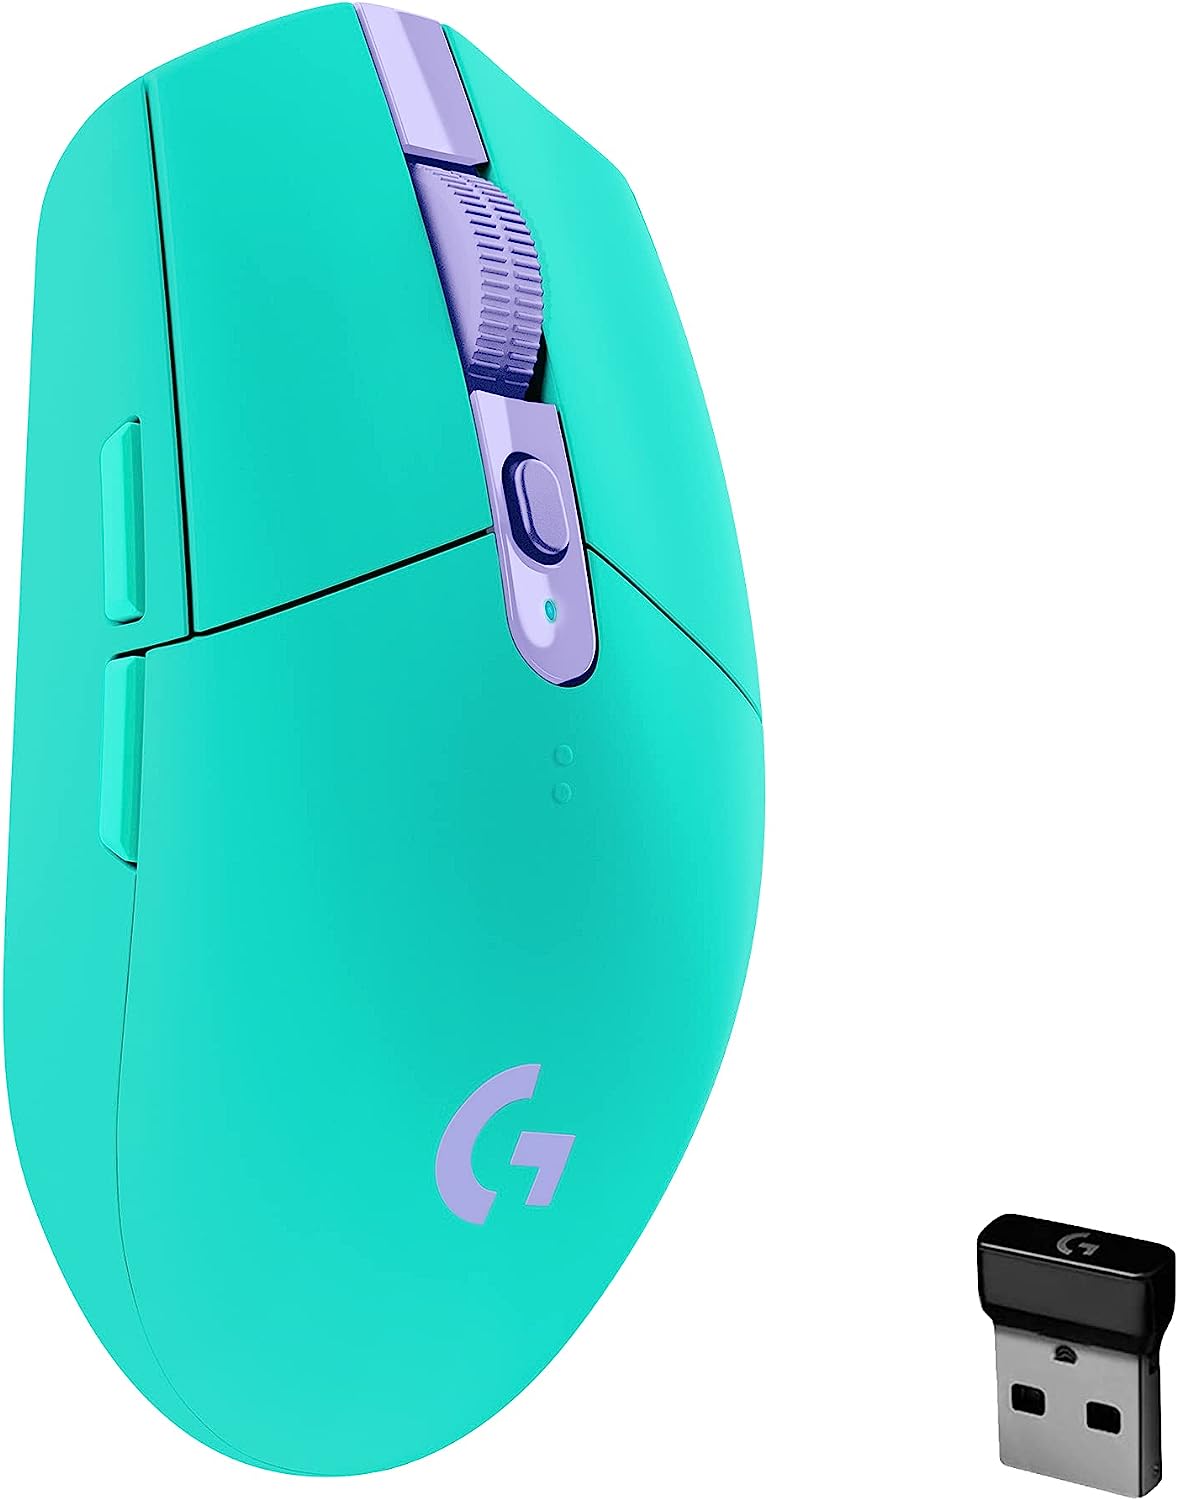 Logitech G305 LIGHTSPEED Wireless Gaming Mouse - $29.99 Amazon